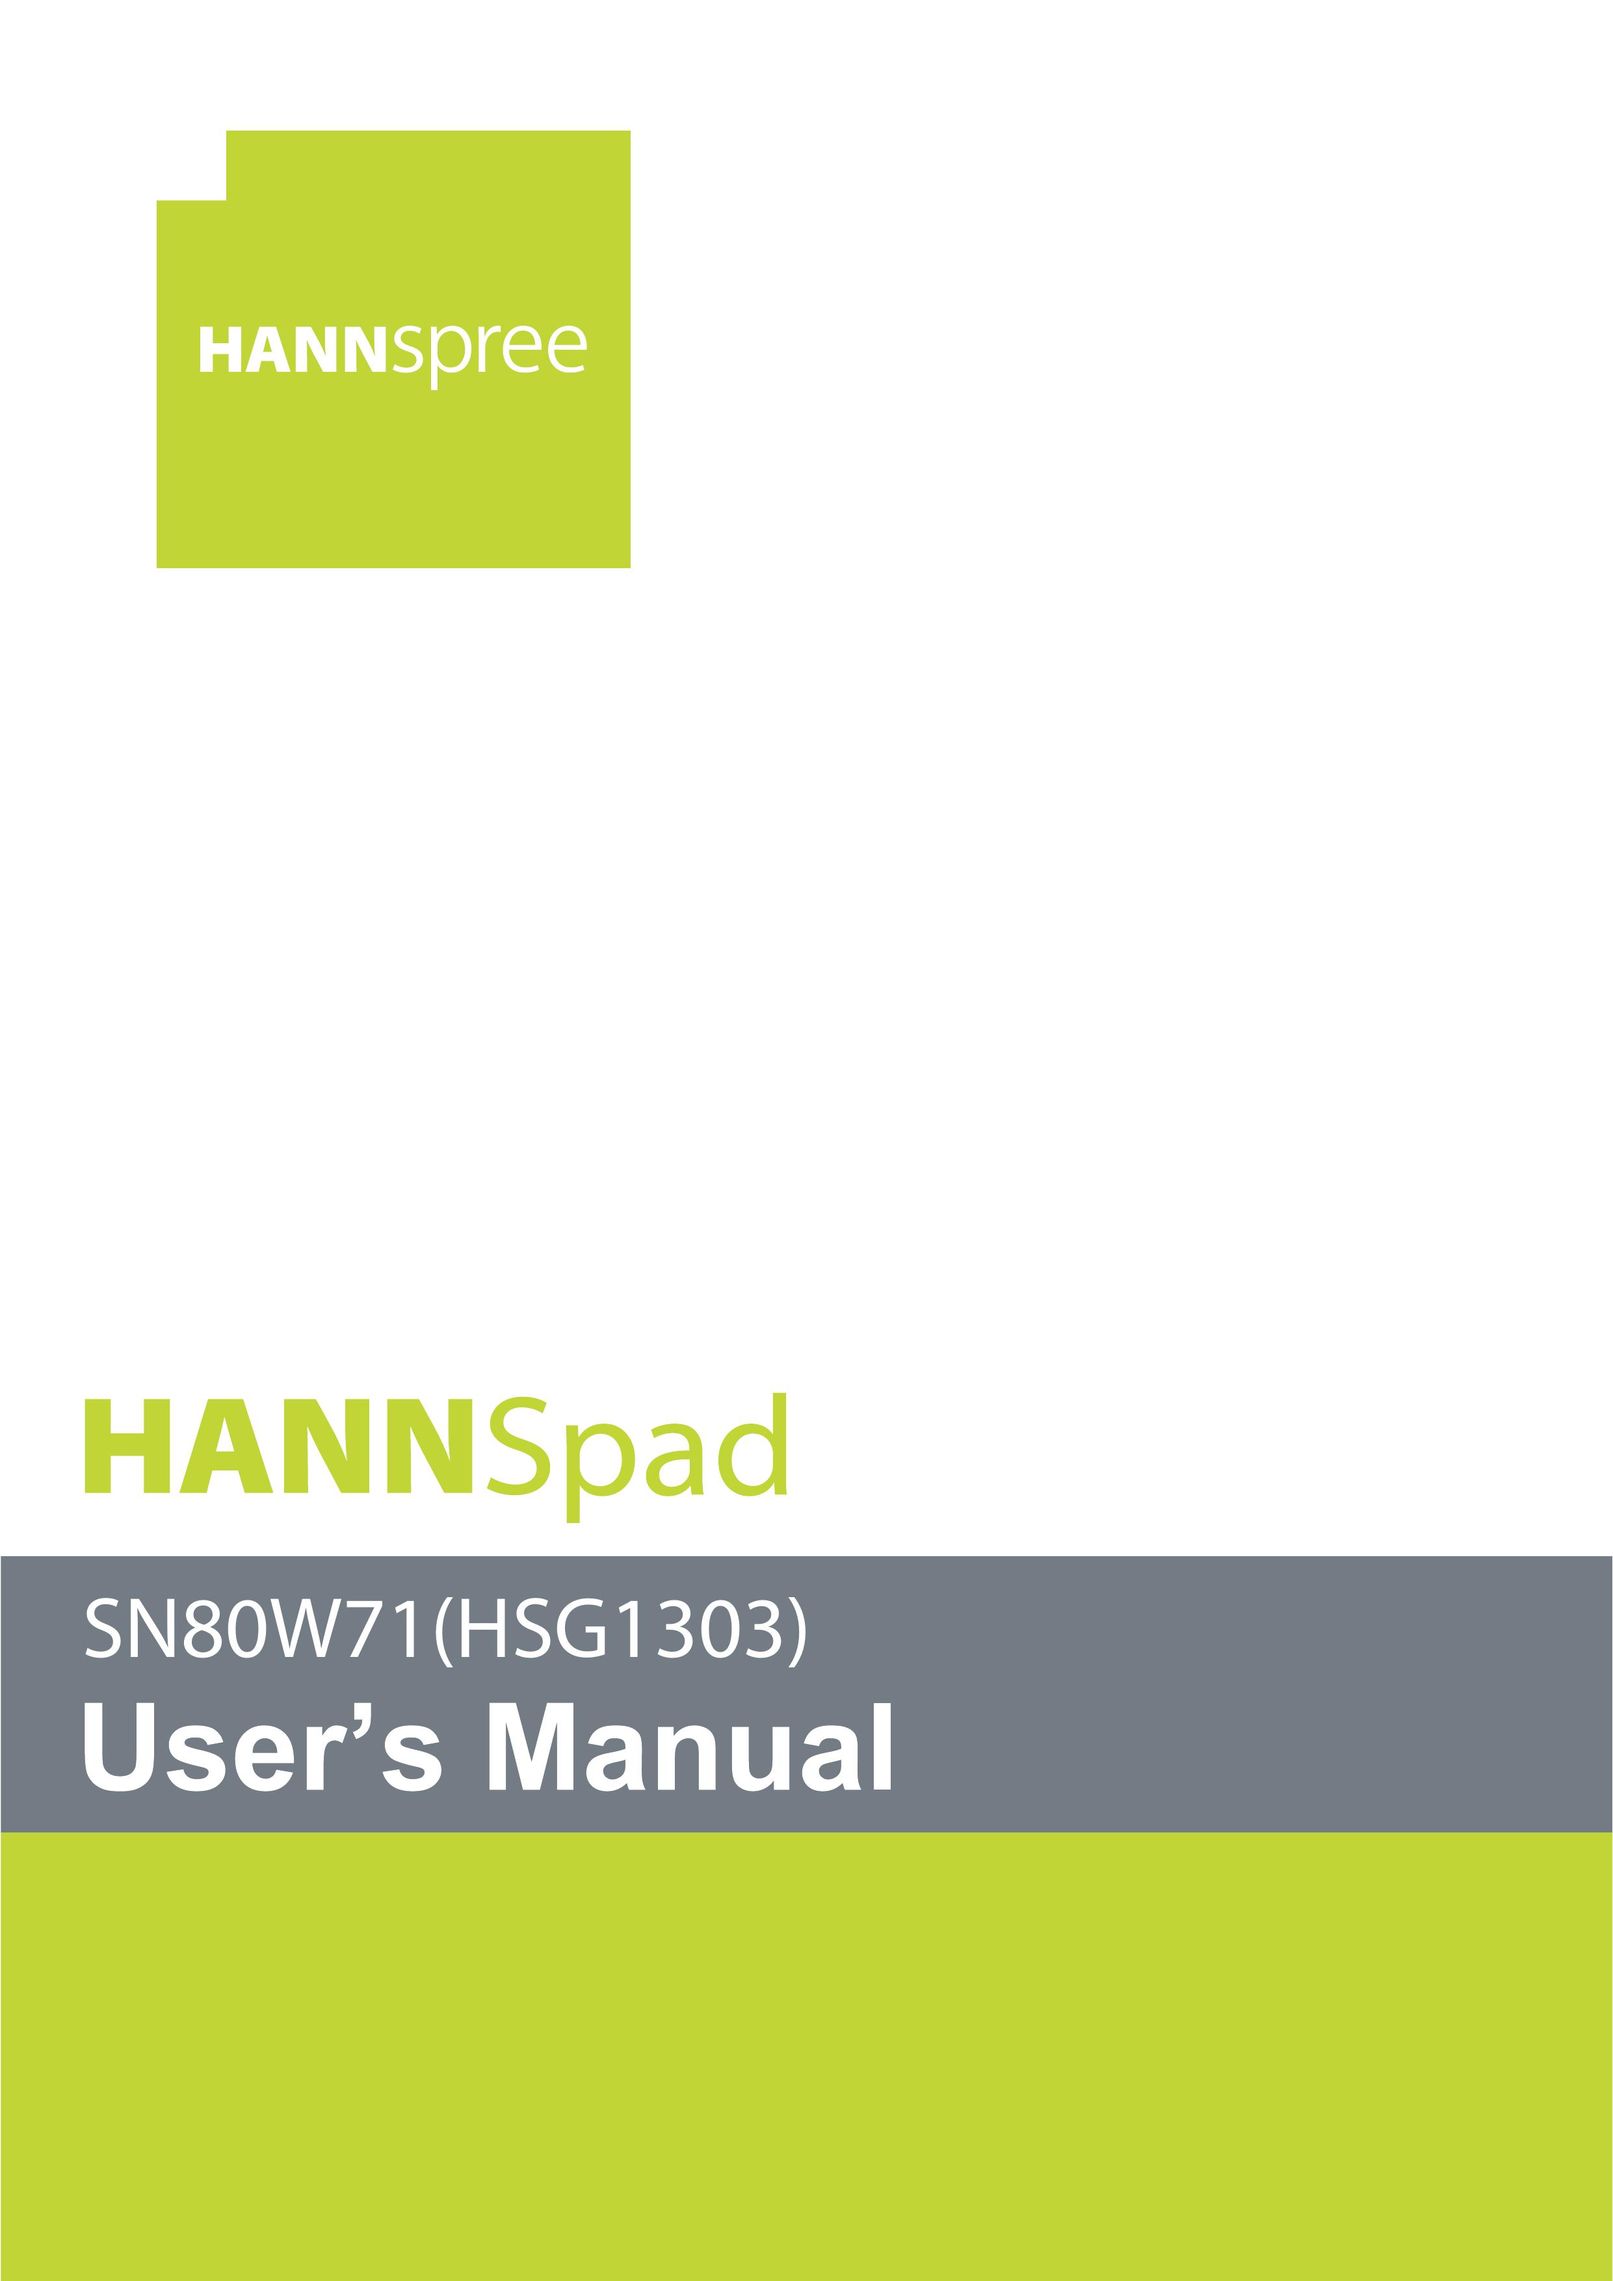 HANNspree HSG1303 Tablet Accessory User Manual